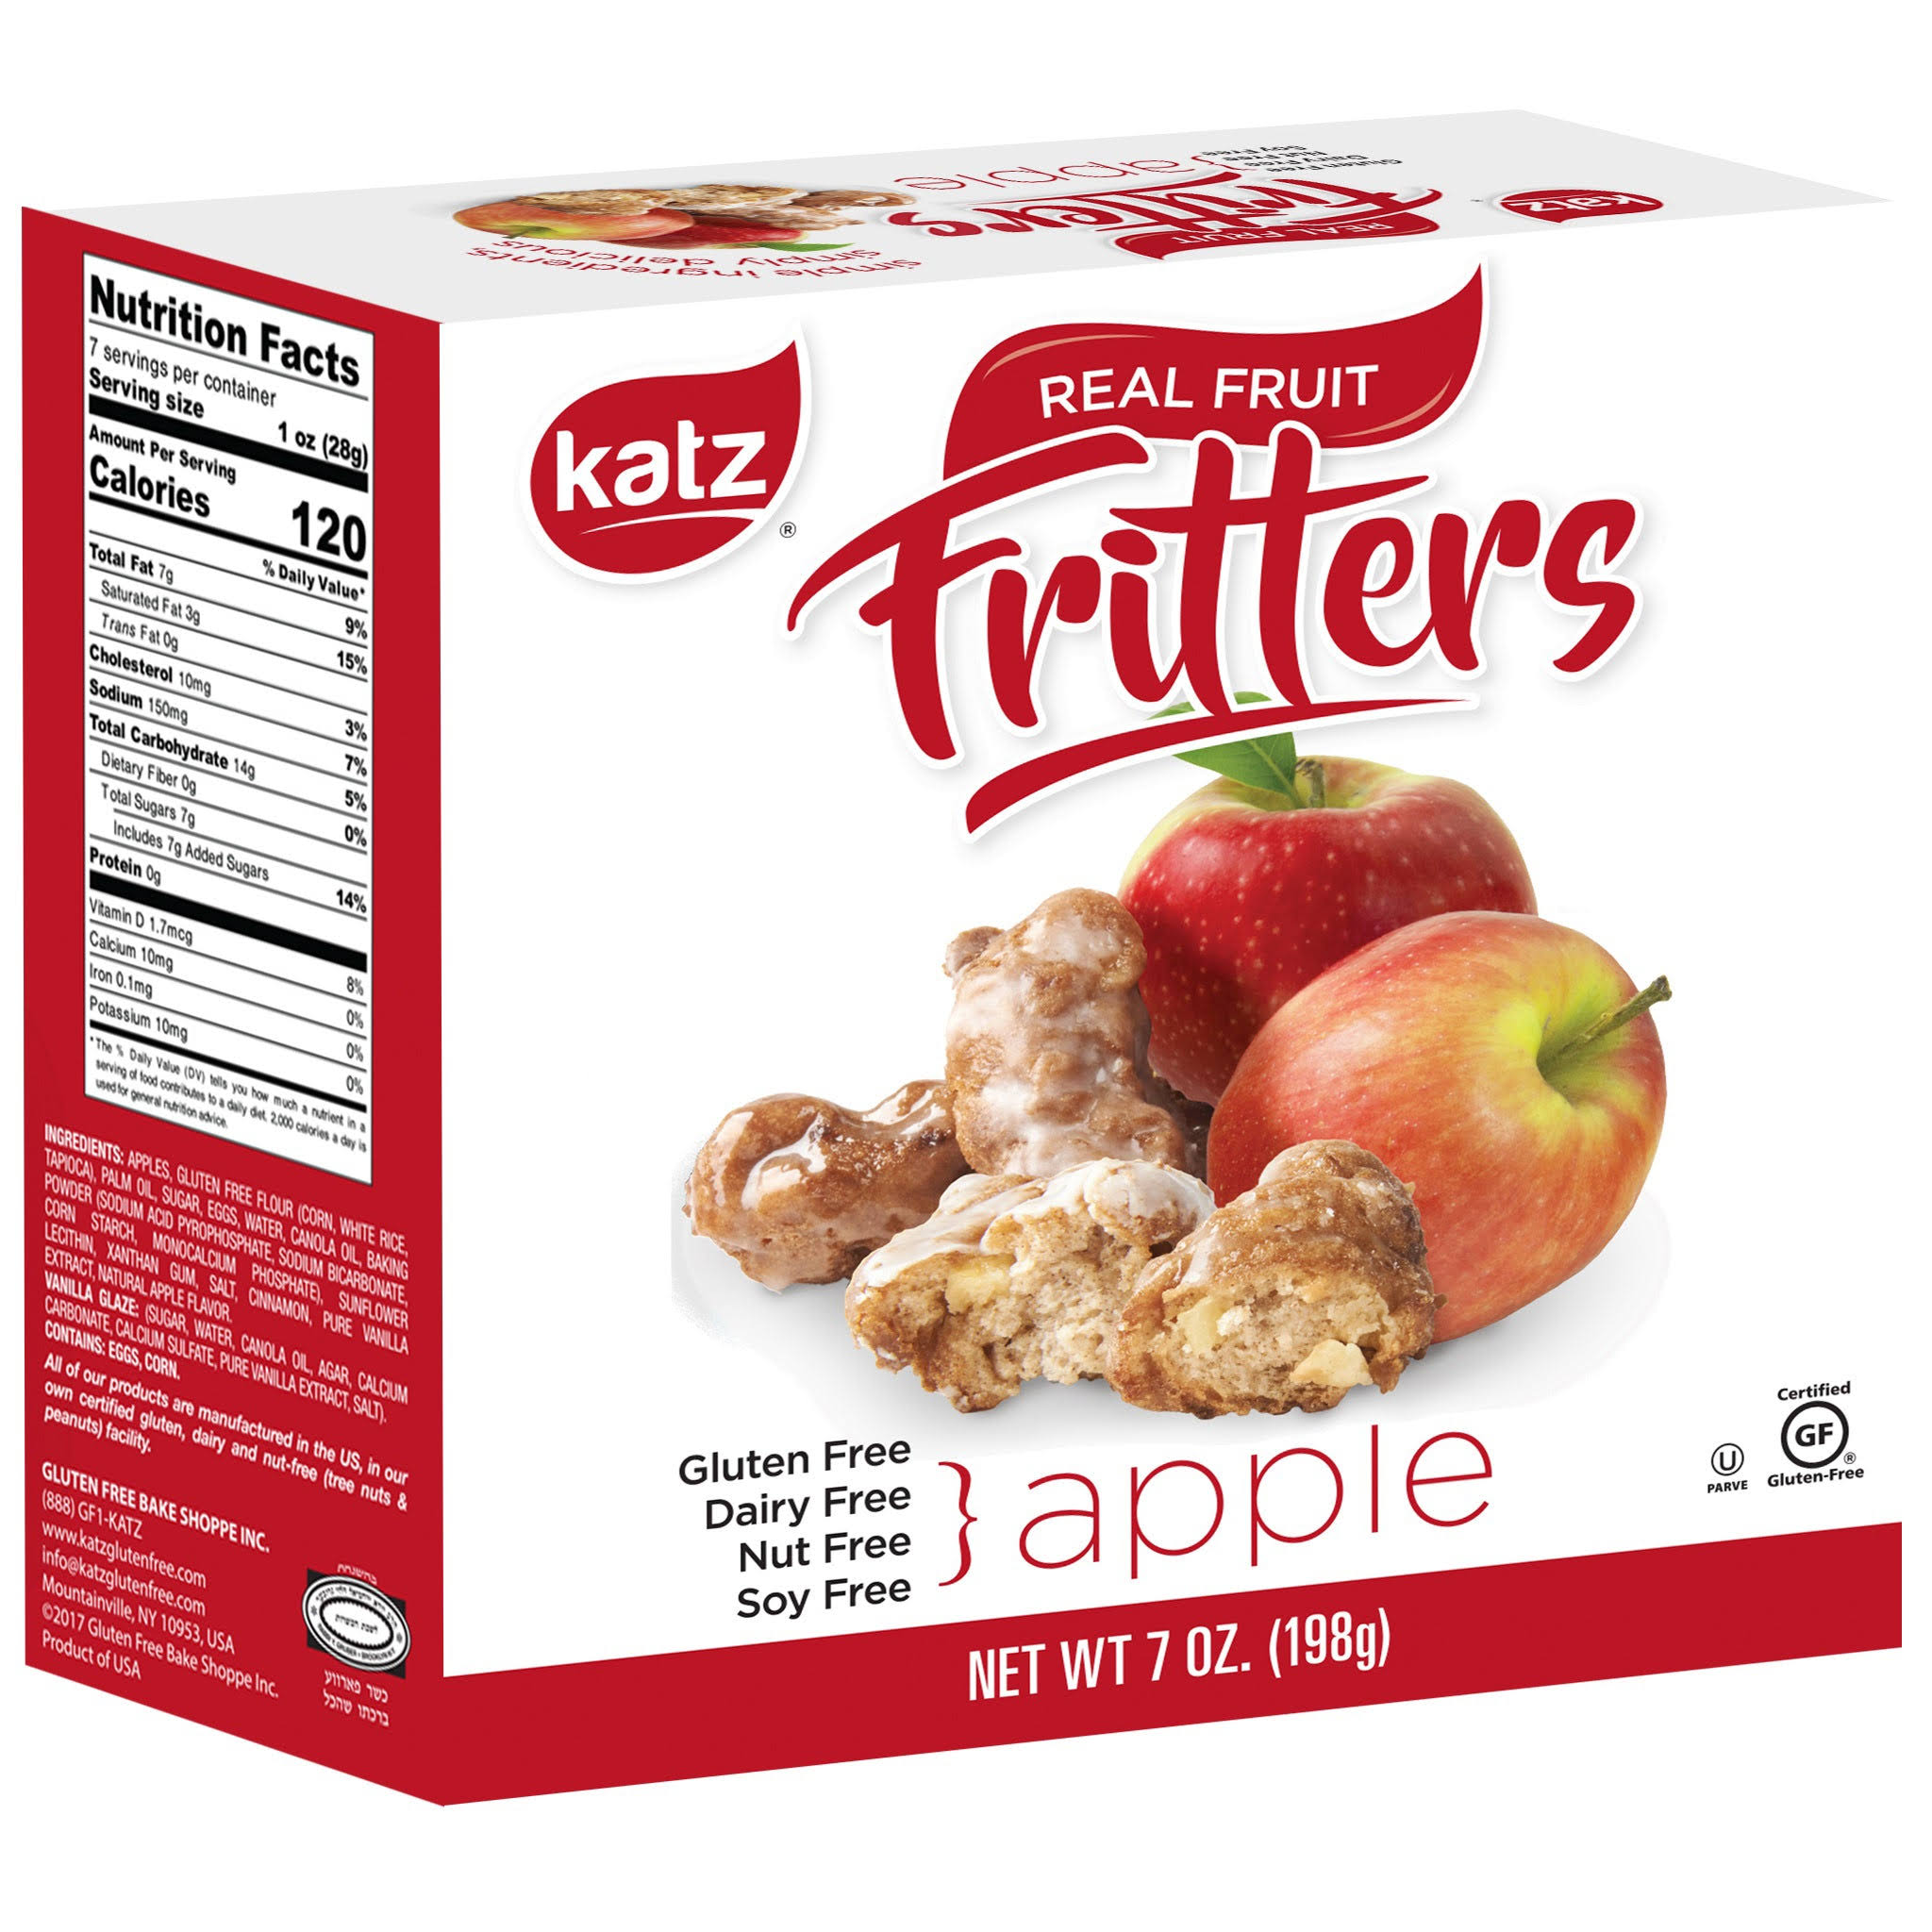 Katz Fritters, Real Fruit, Apple - 7 oz